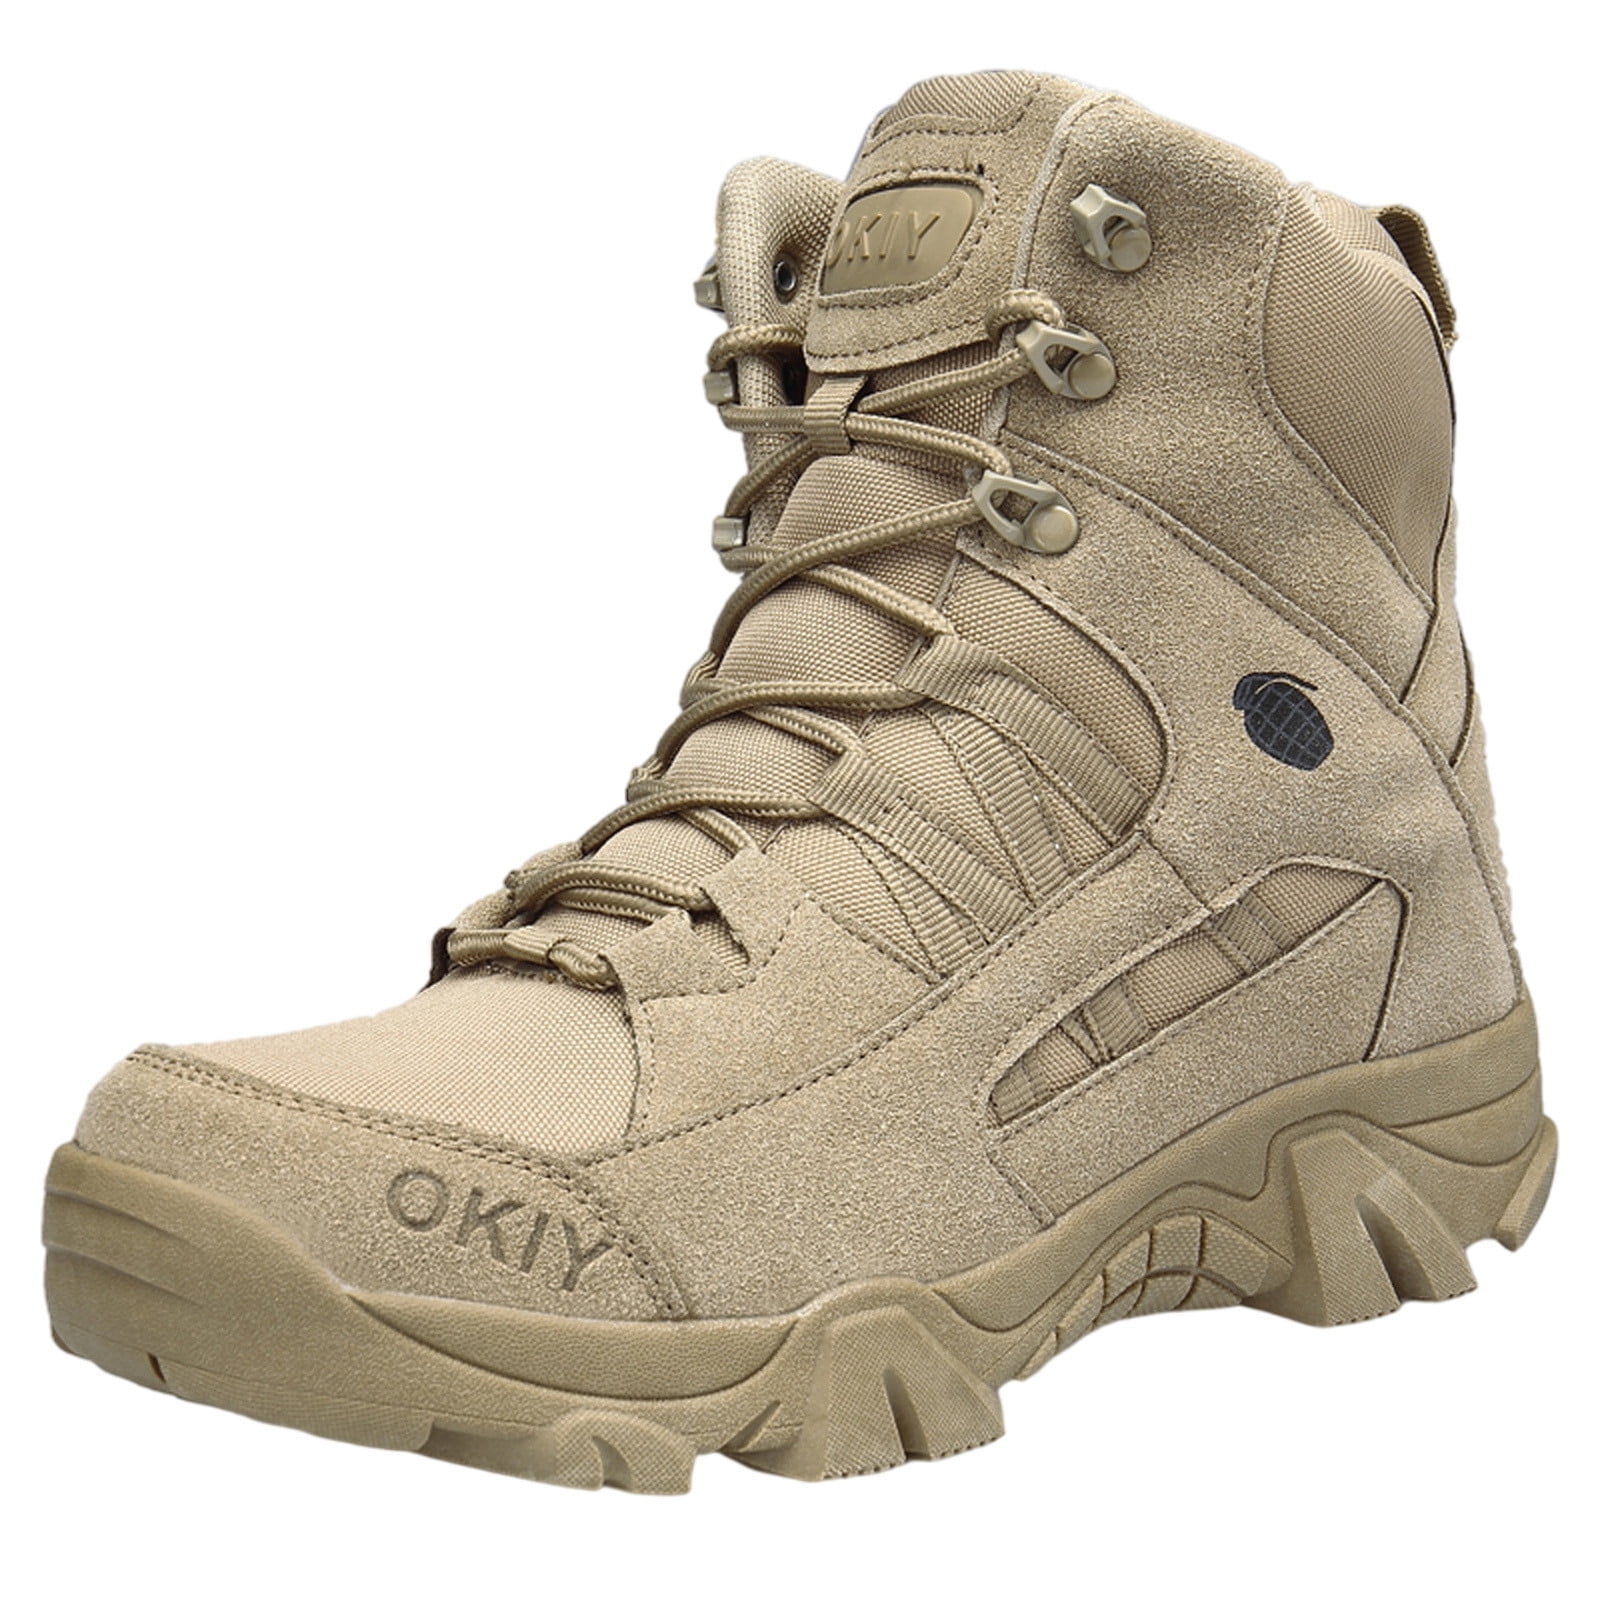 Men Military Tactical Boots Desert Combat Army Hiking Travel Bota Shoes UK STOCK 